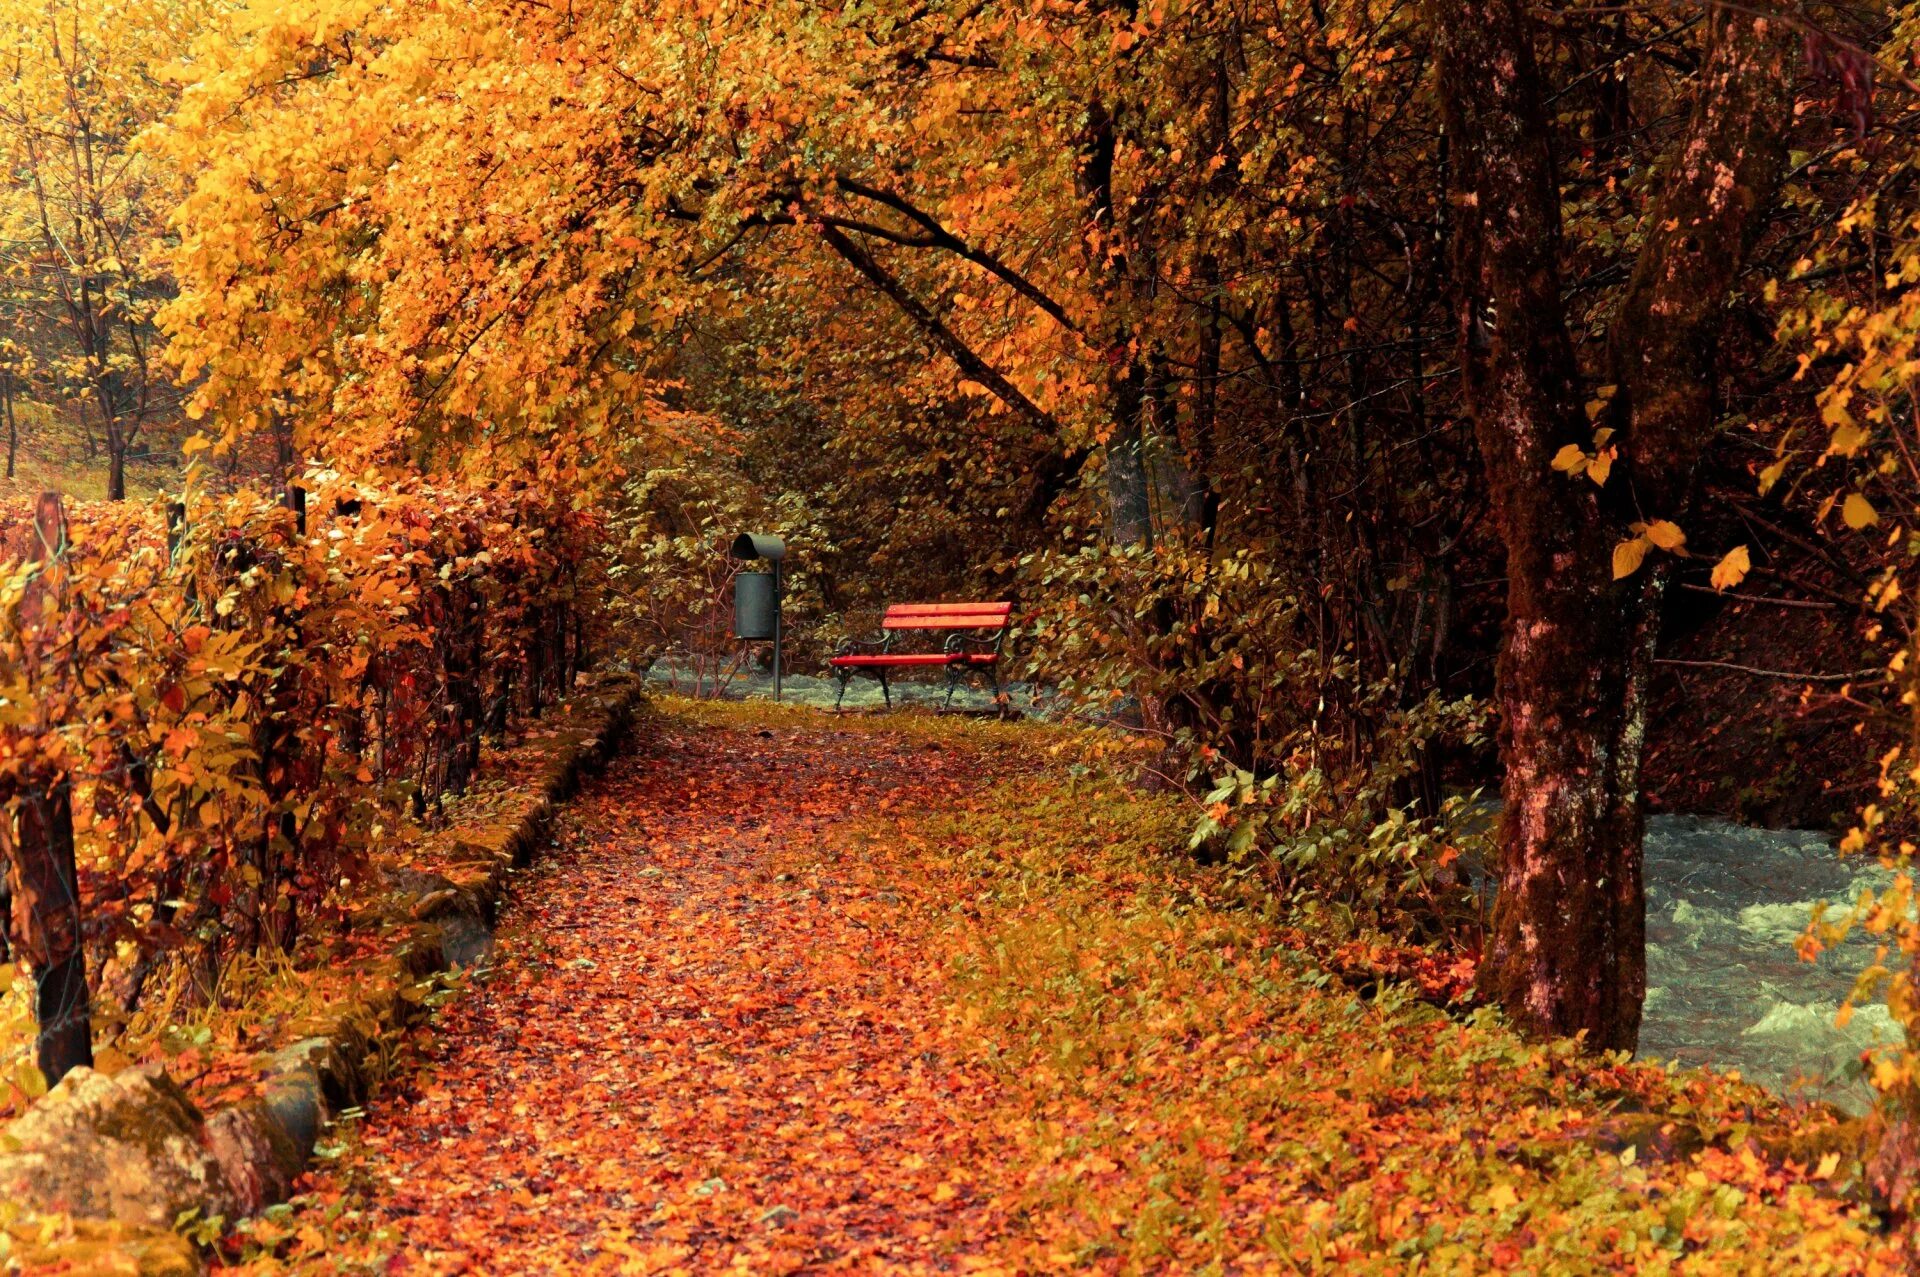 Осень без людей. Осенний парк. Осень в парке. Осень в саду. Осенняя дорожка в парке.